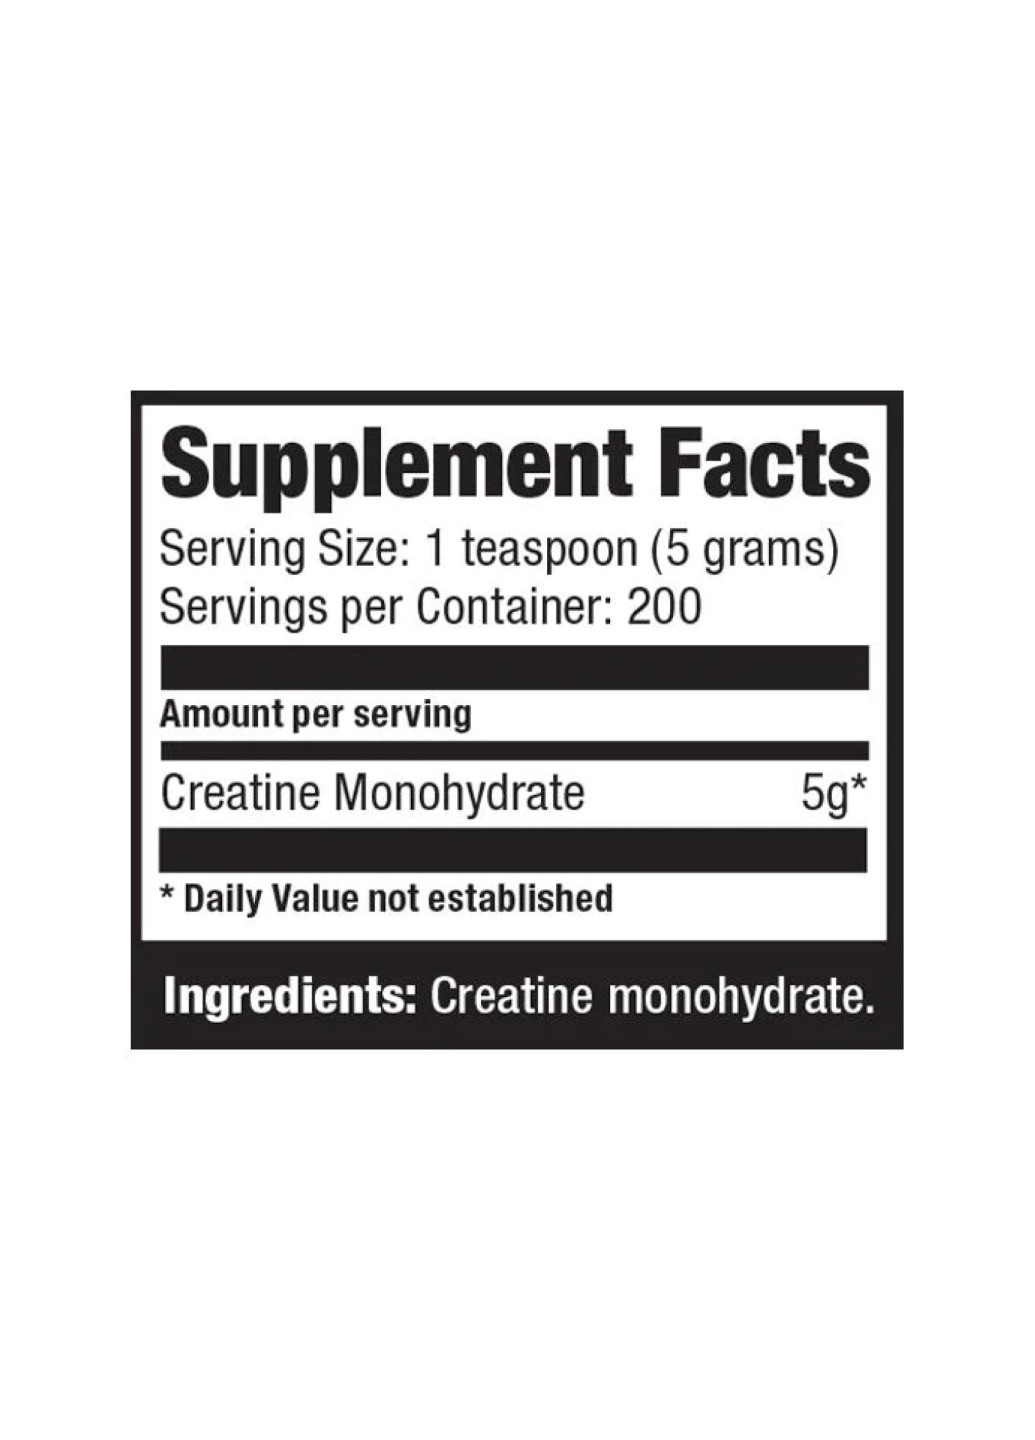 Креатин для восстановления Creatine Monohydrate - 1000g Ultimate Nutrition (270007782)